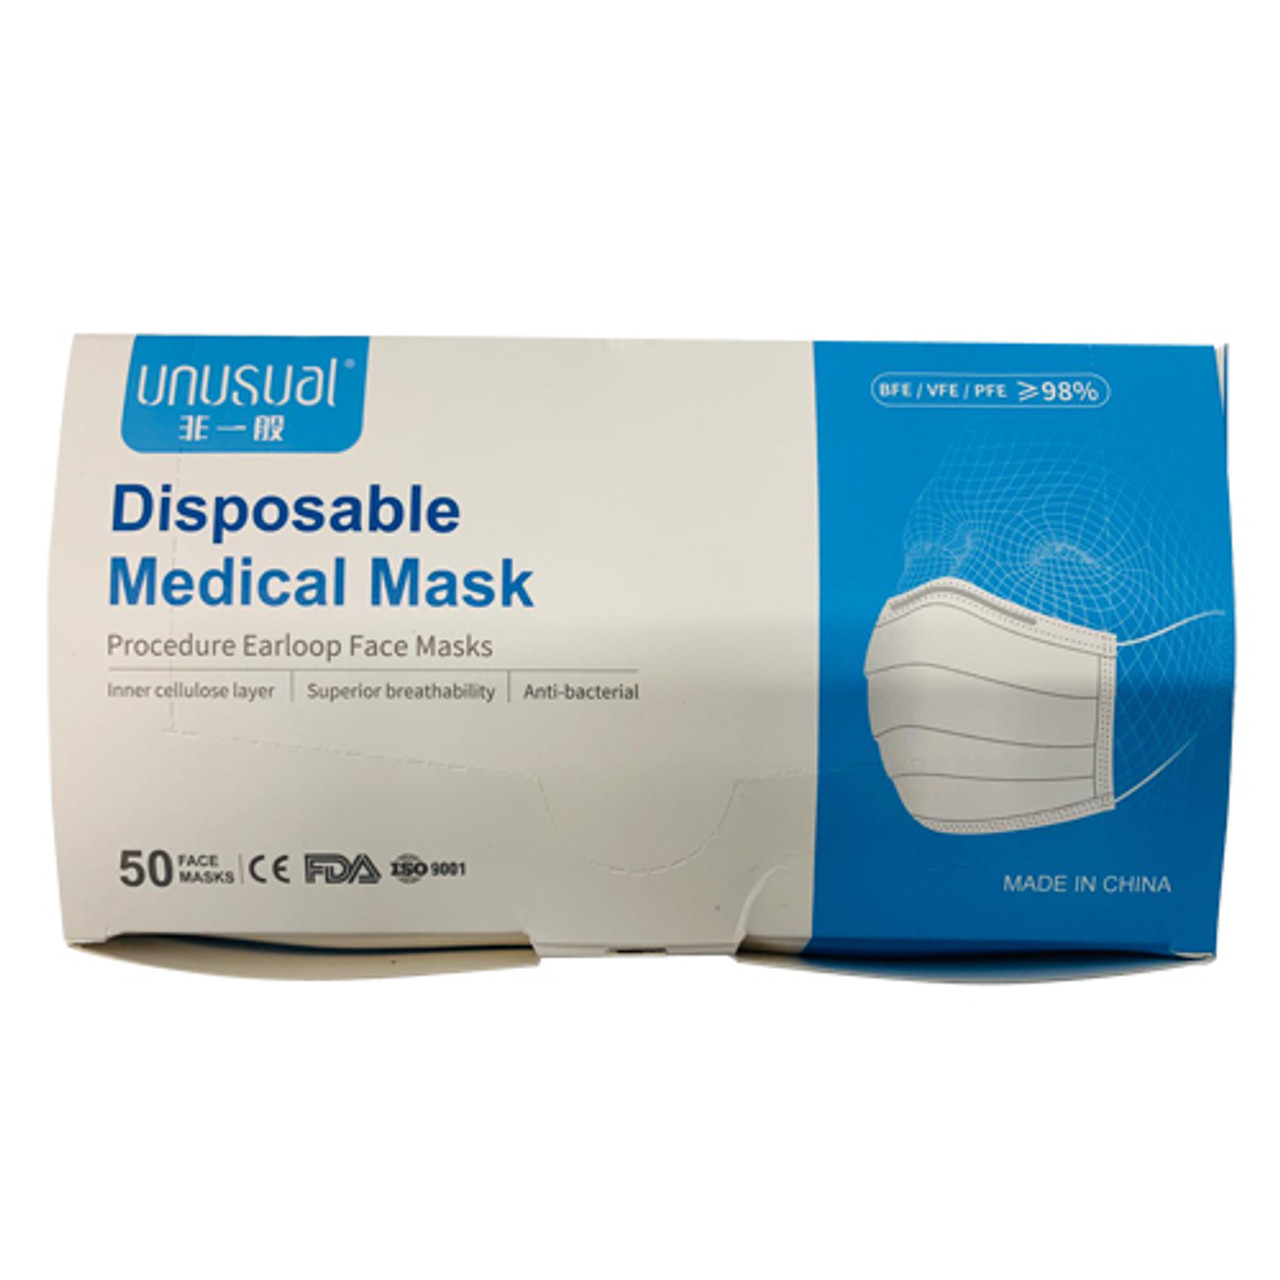 Medical Supplies, AMD Ritmed Distech Procedure Mask - 50 Count